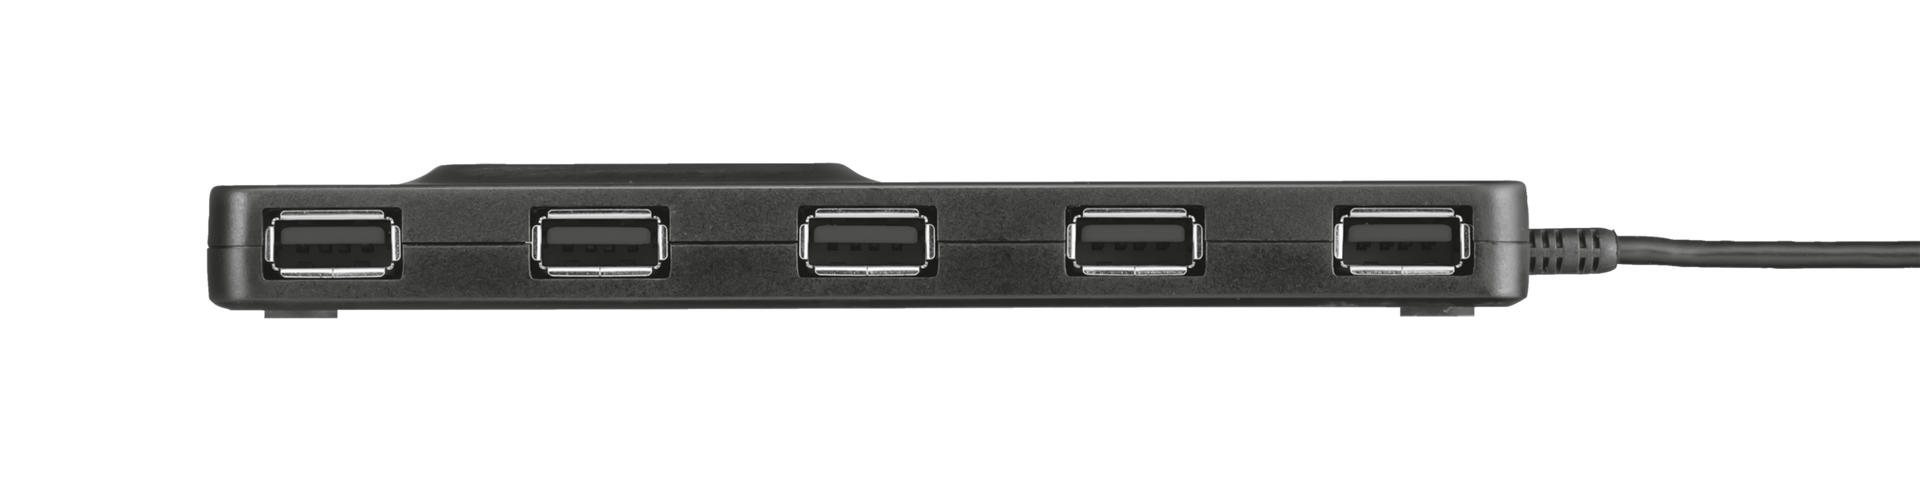 Oila 7 Port USB 2.0 Hub-Side